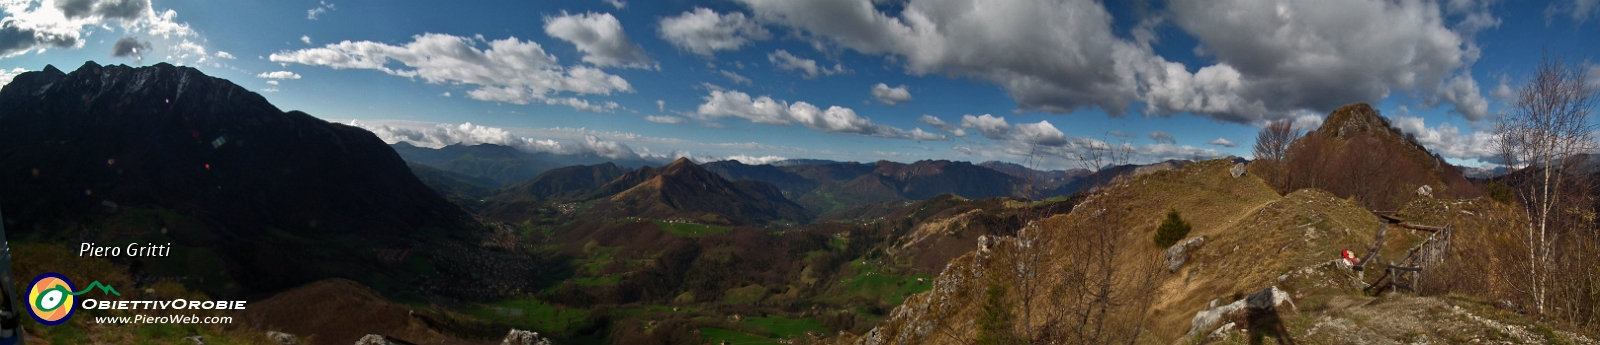 02 Panoramica dal Monte Castello -2.jpg